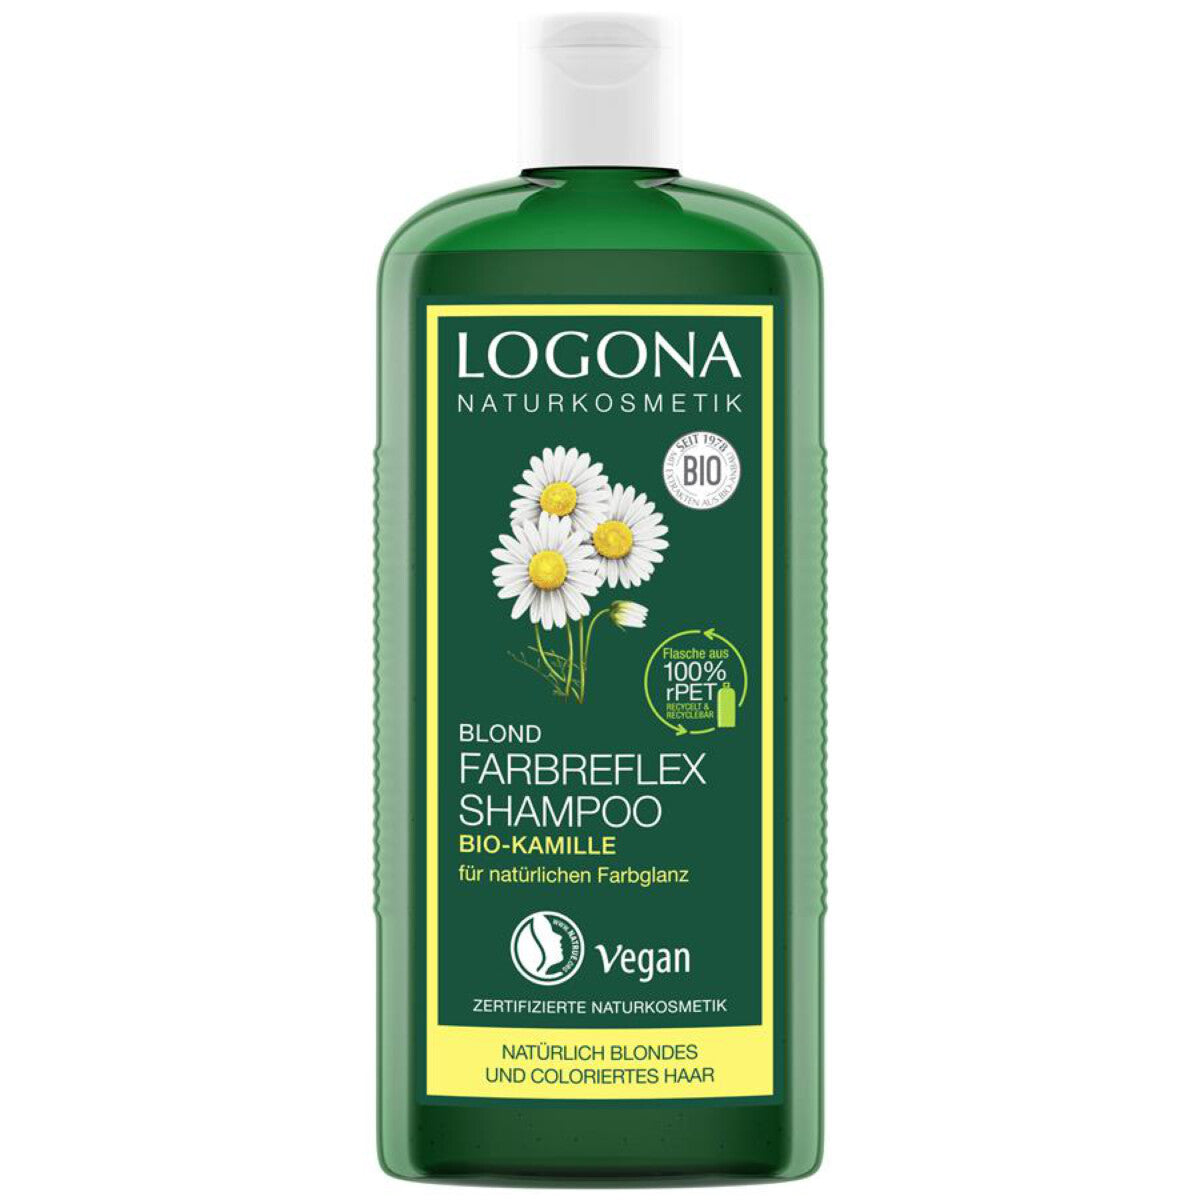 LOGONA Farbreflex Shampoo Kamille - 250 ml